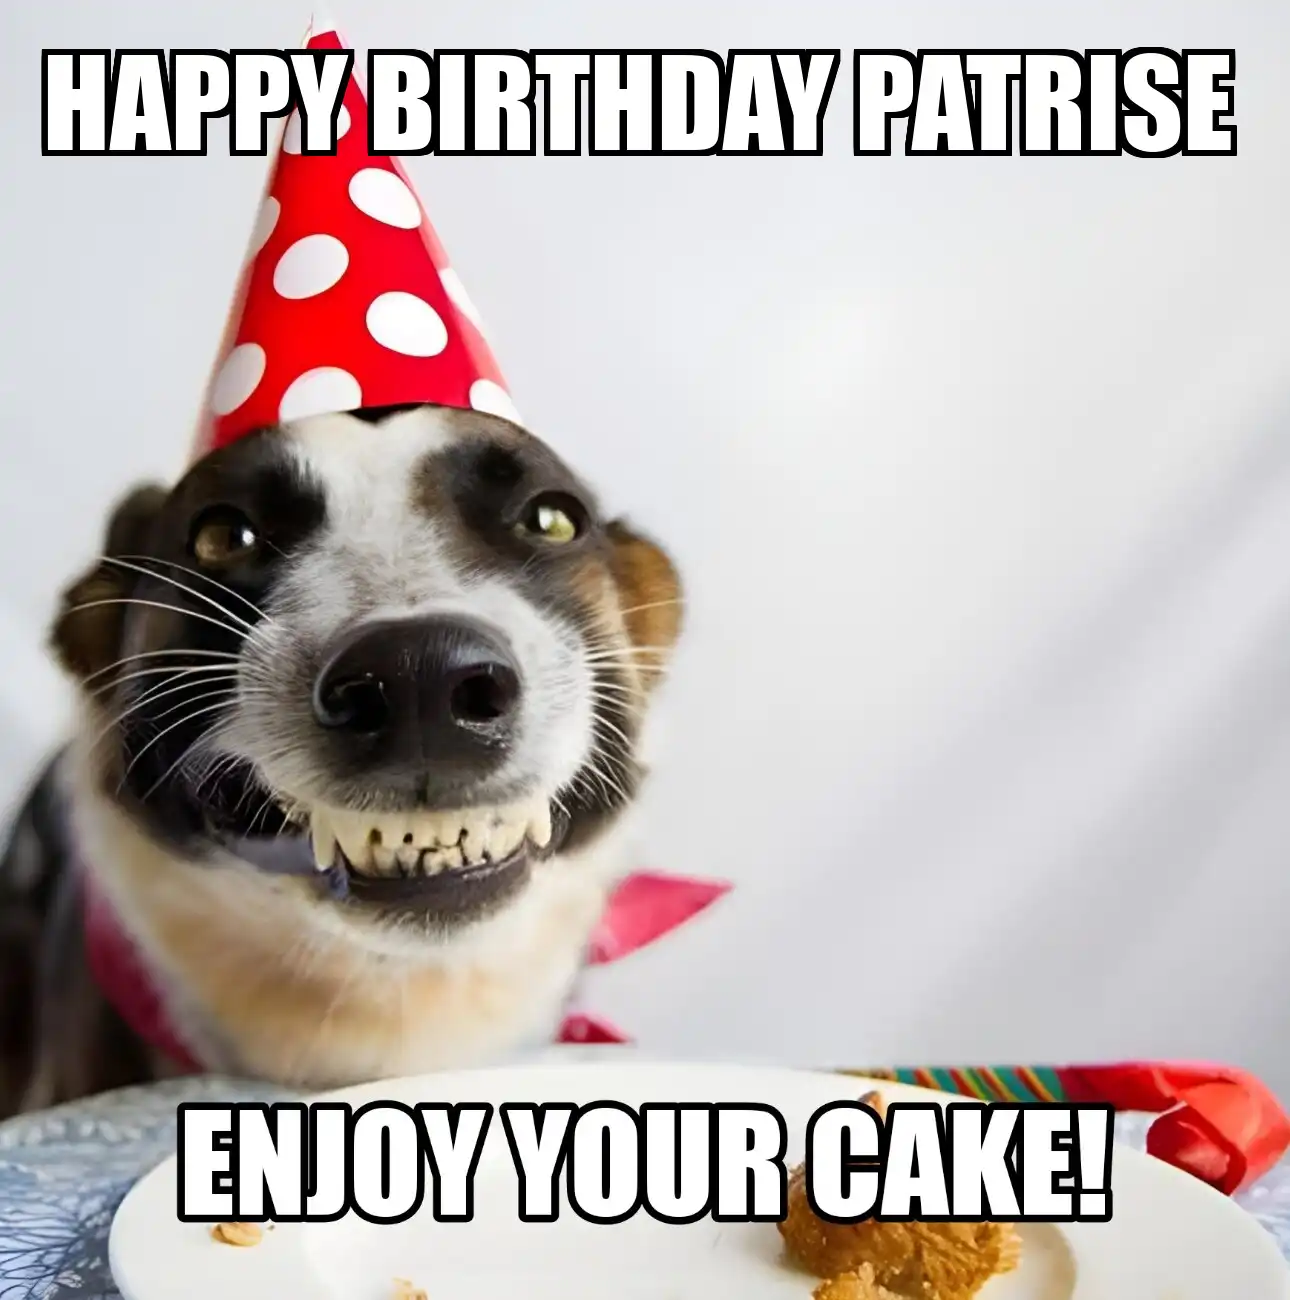 Happy Birthday Patrise Enjoy Your Cake Dog Meme